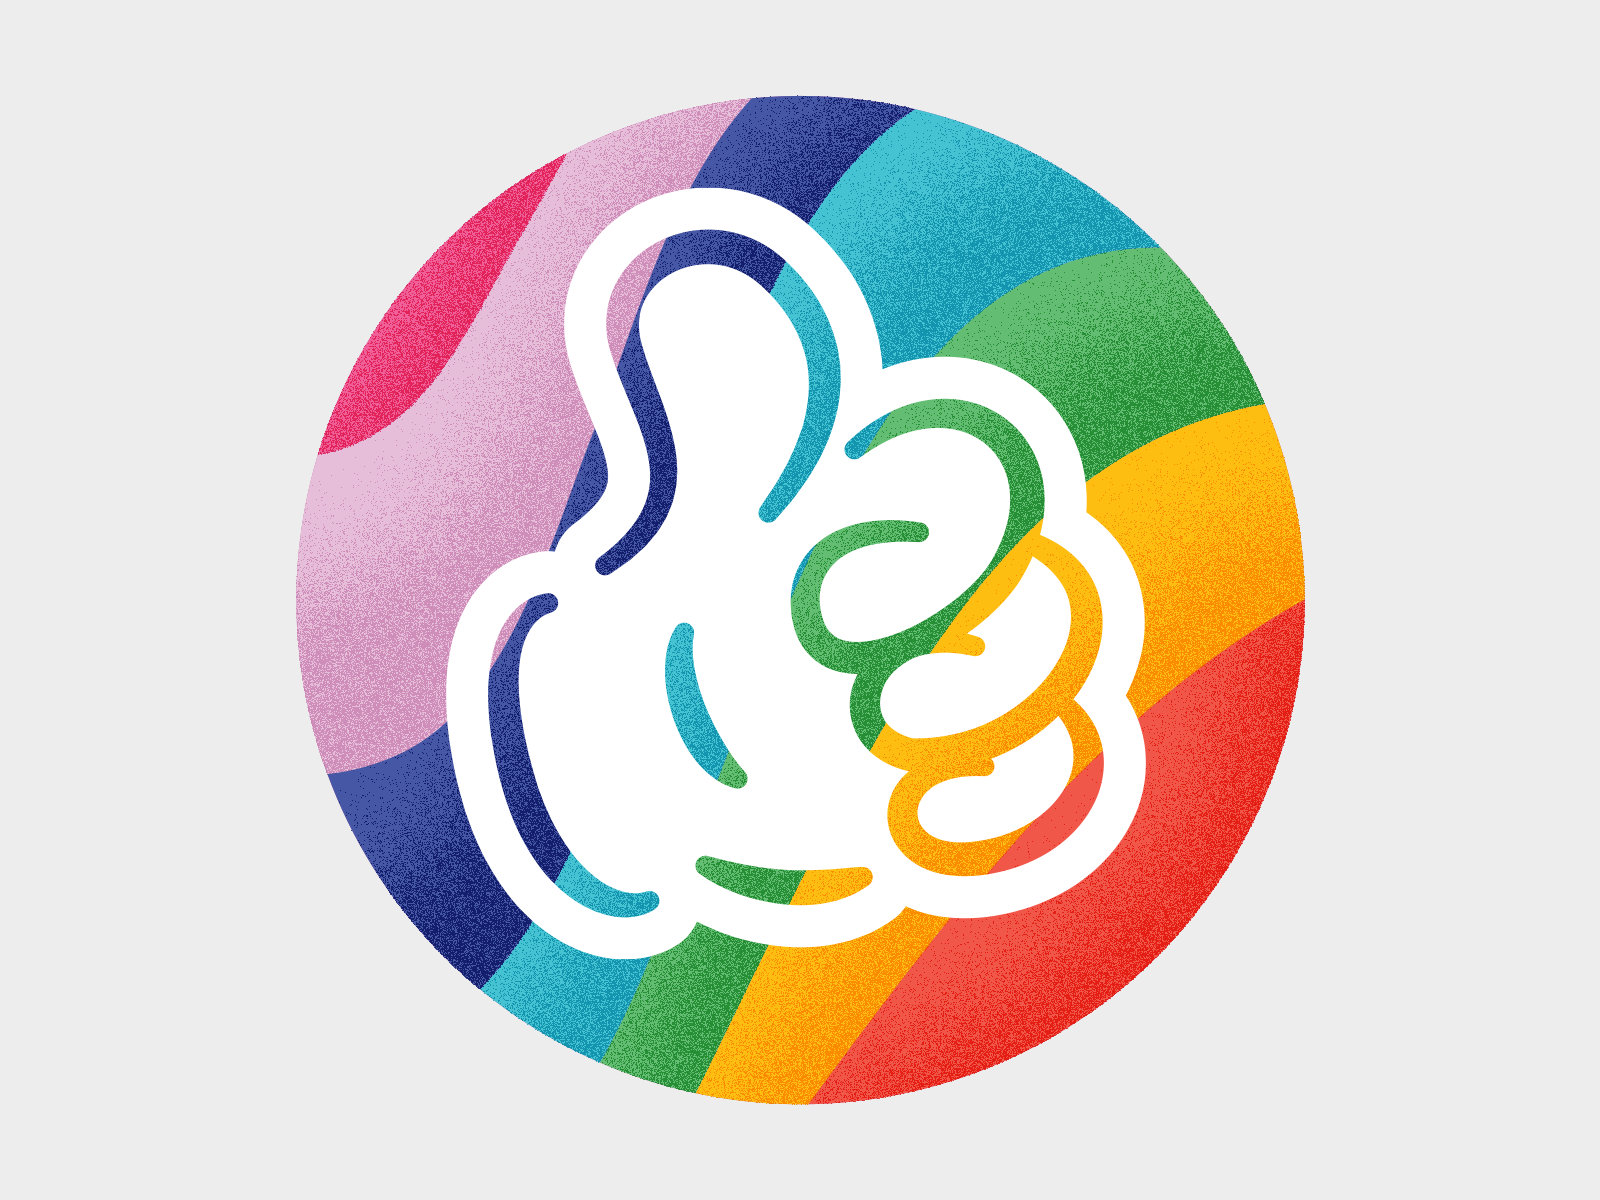 gay pride logo png